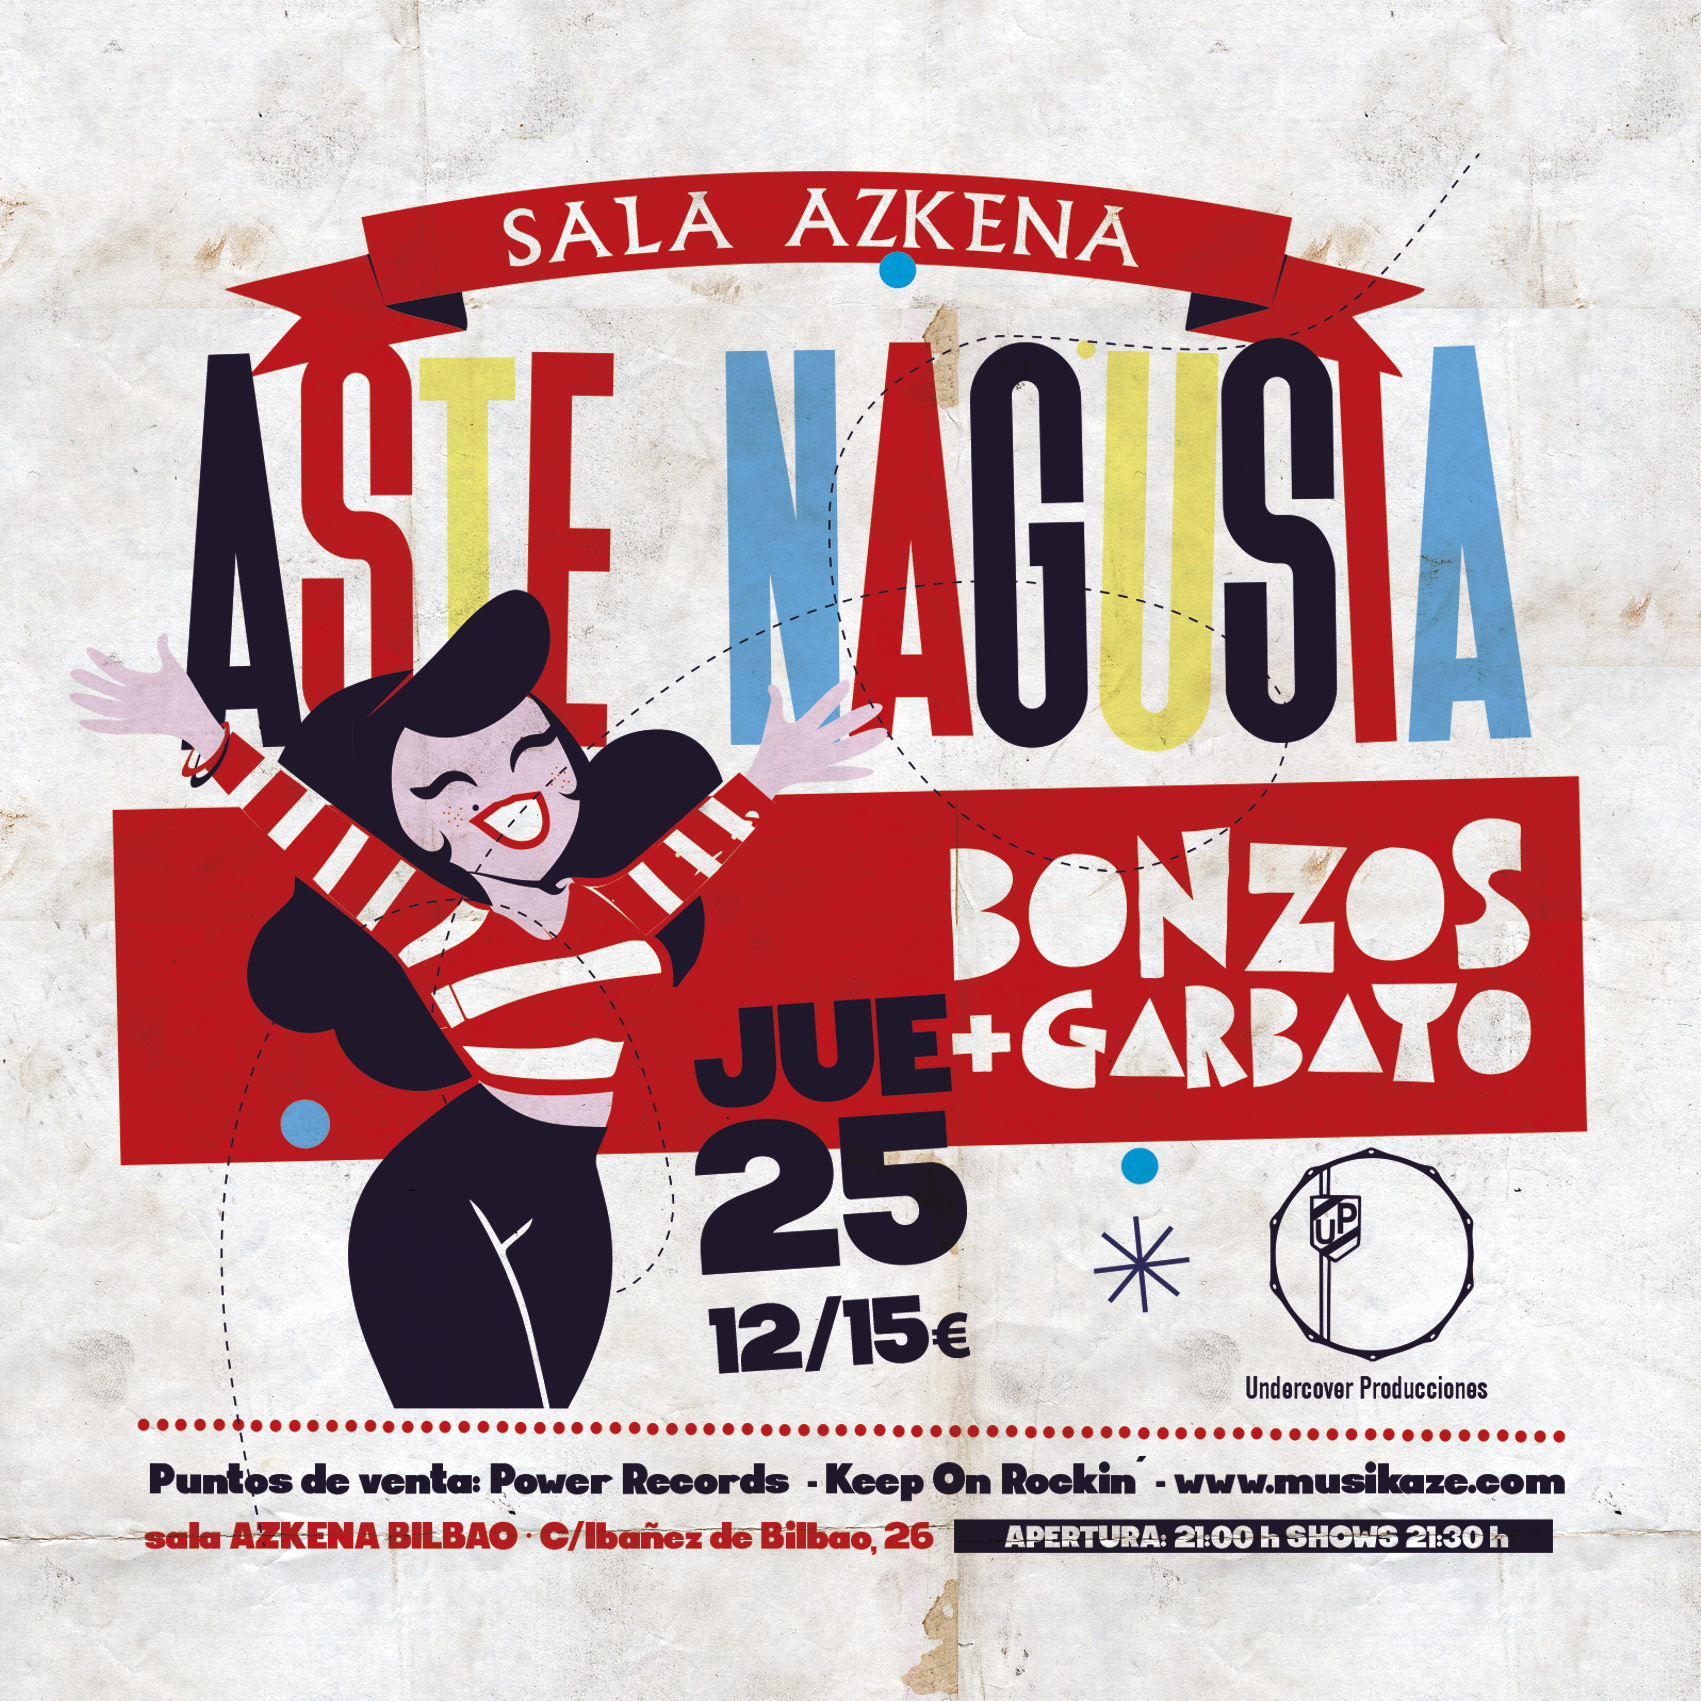 ASTE NAGUSIA - Los Bonzos + Garbayo en Bilbao - Mutick